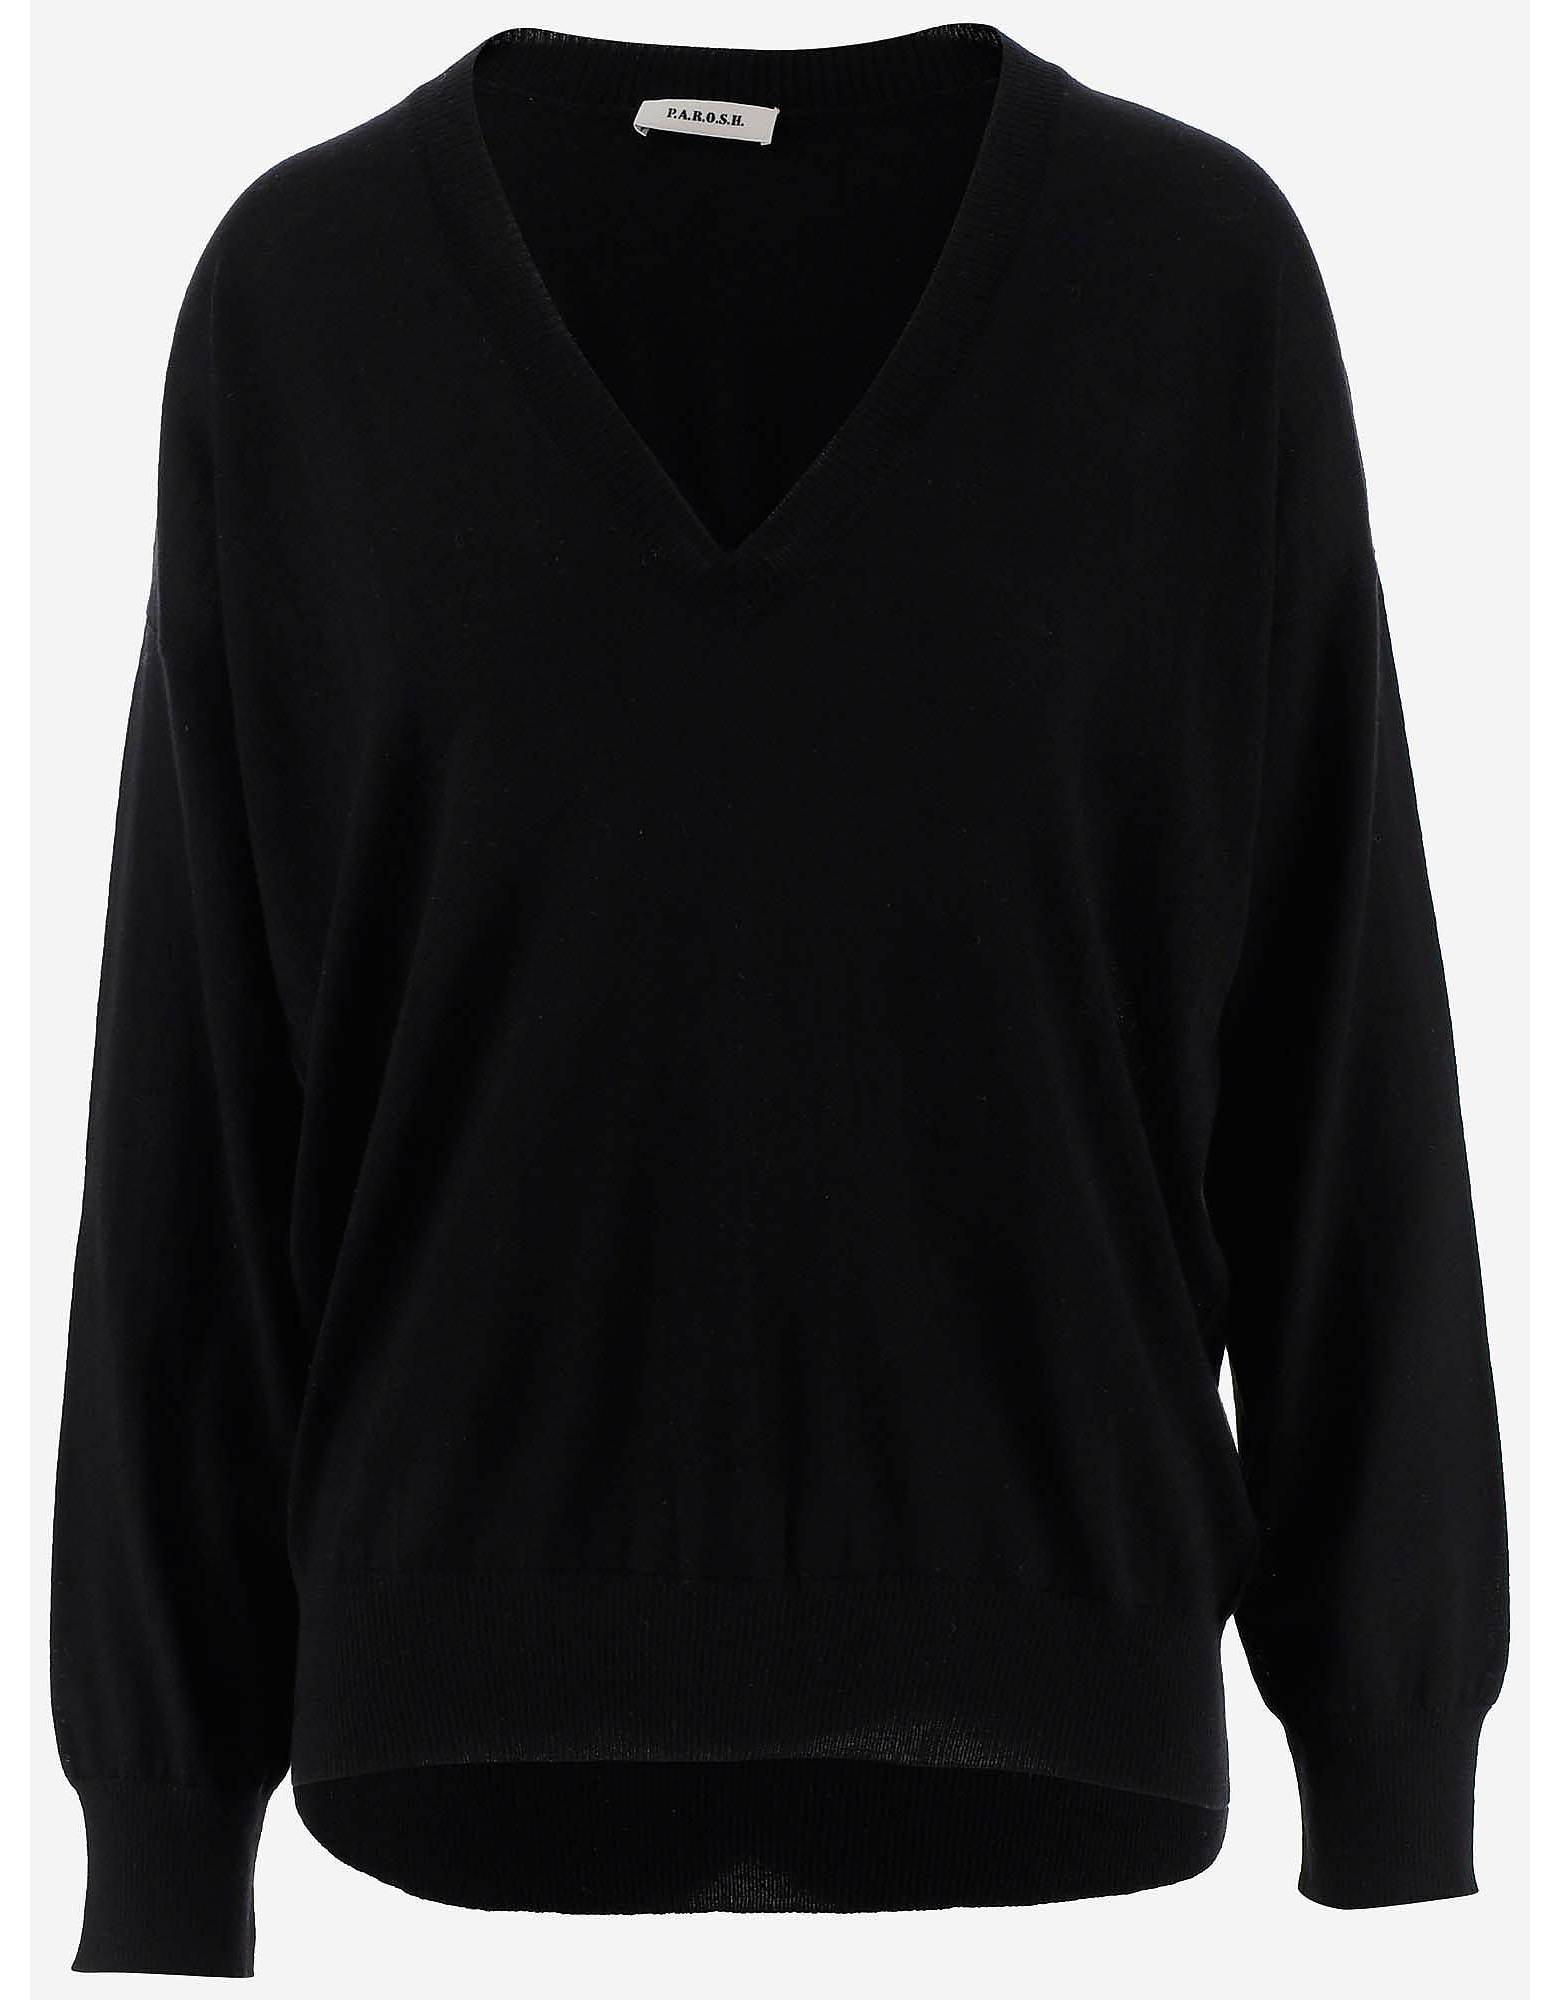 Parosh Designer Knitwear, Black Cashmere Women's V-neck Sweater